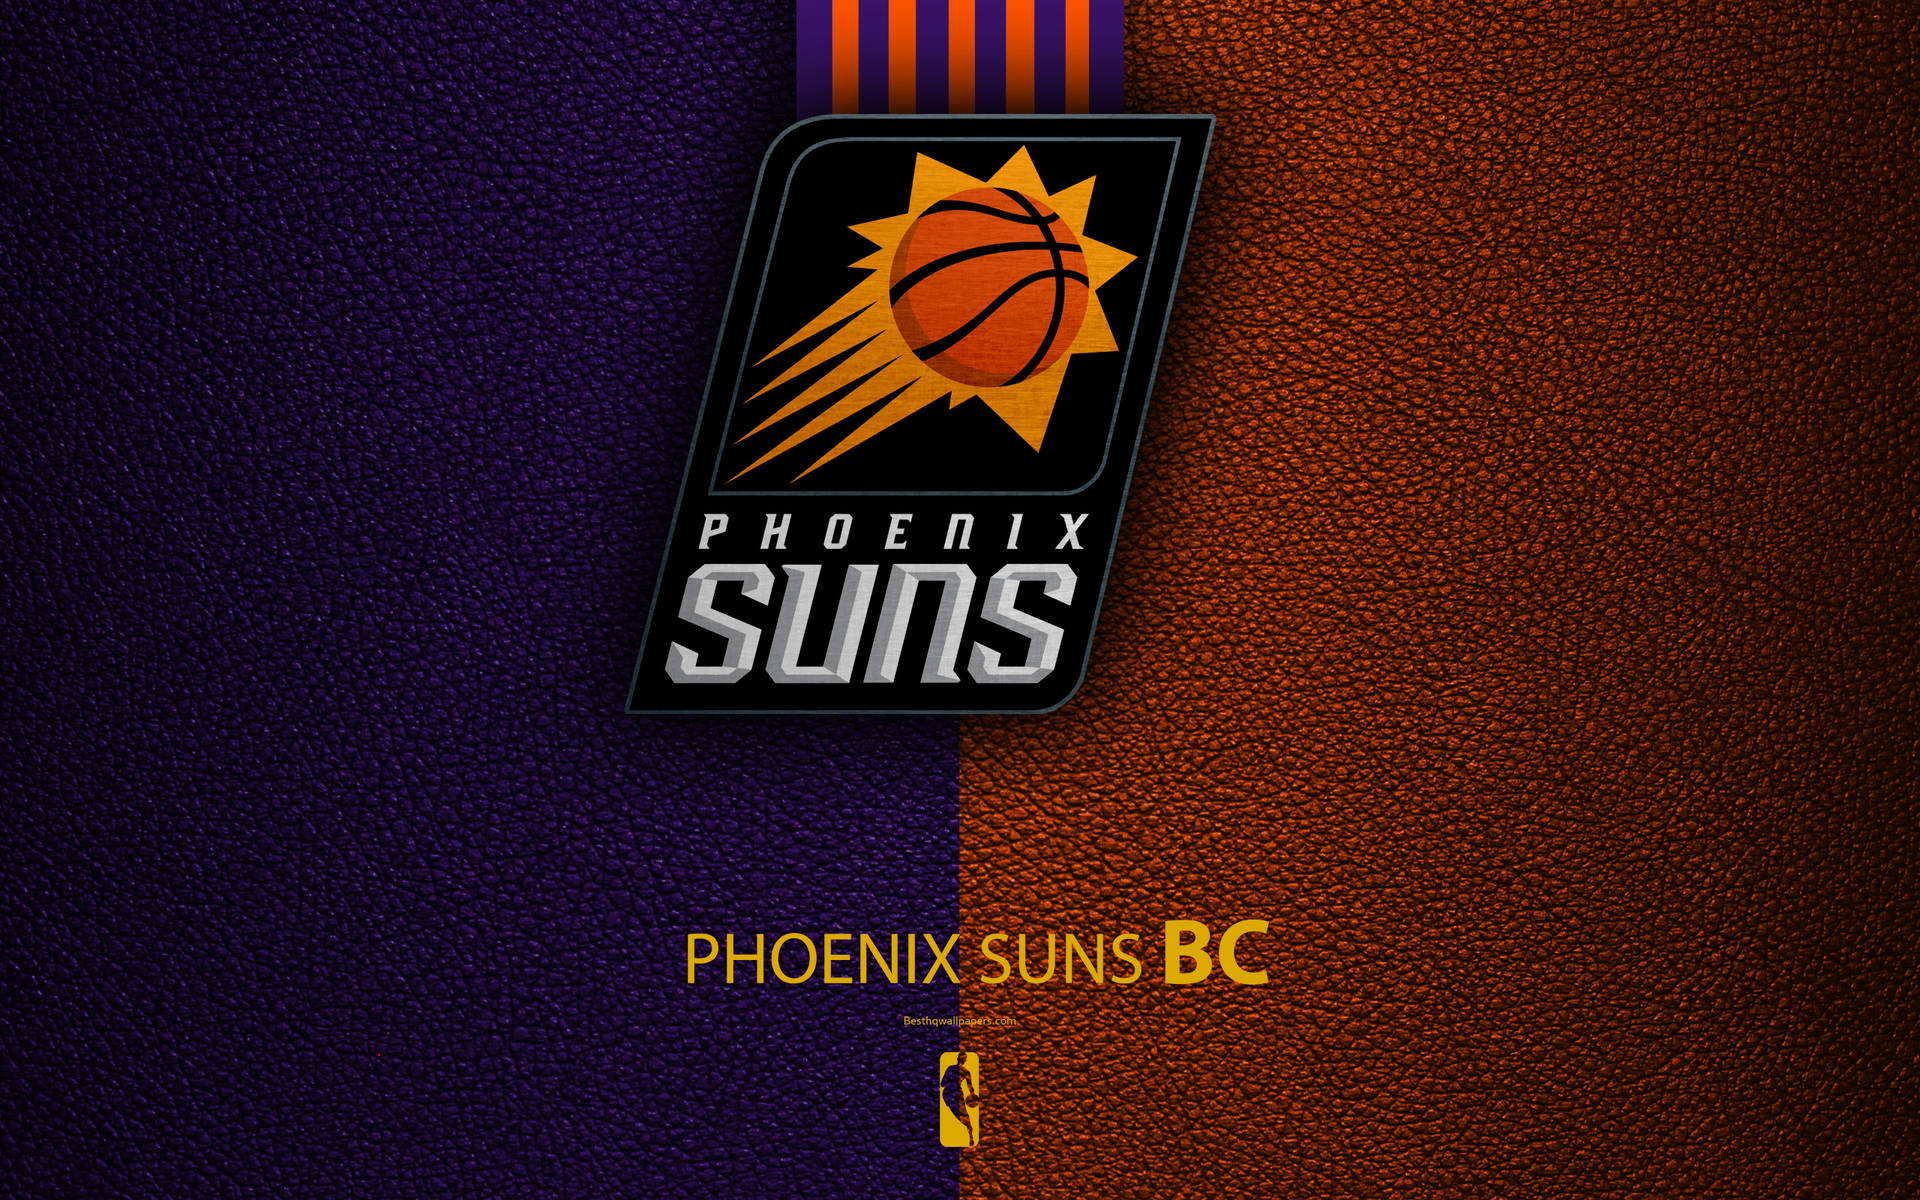 Phoenix Suns In Purple And Orange